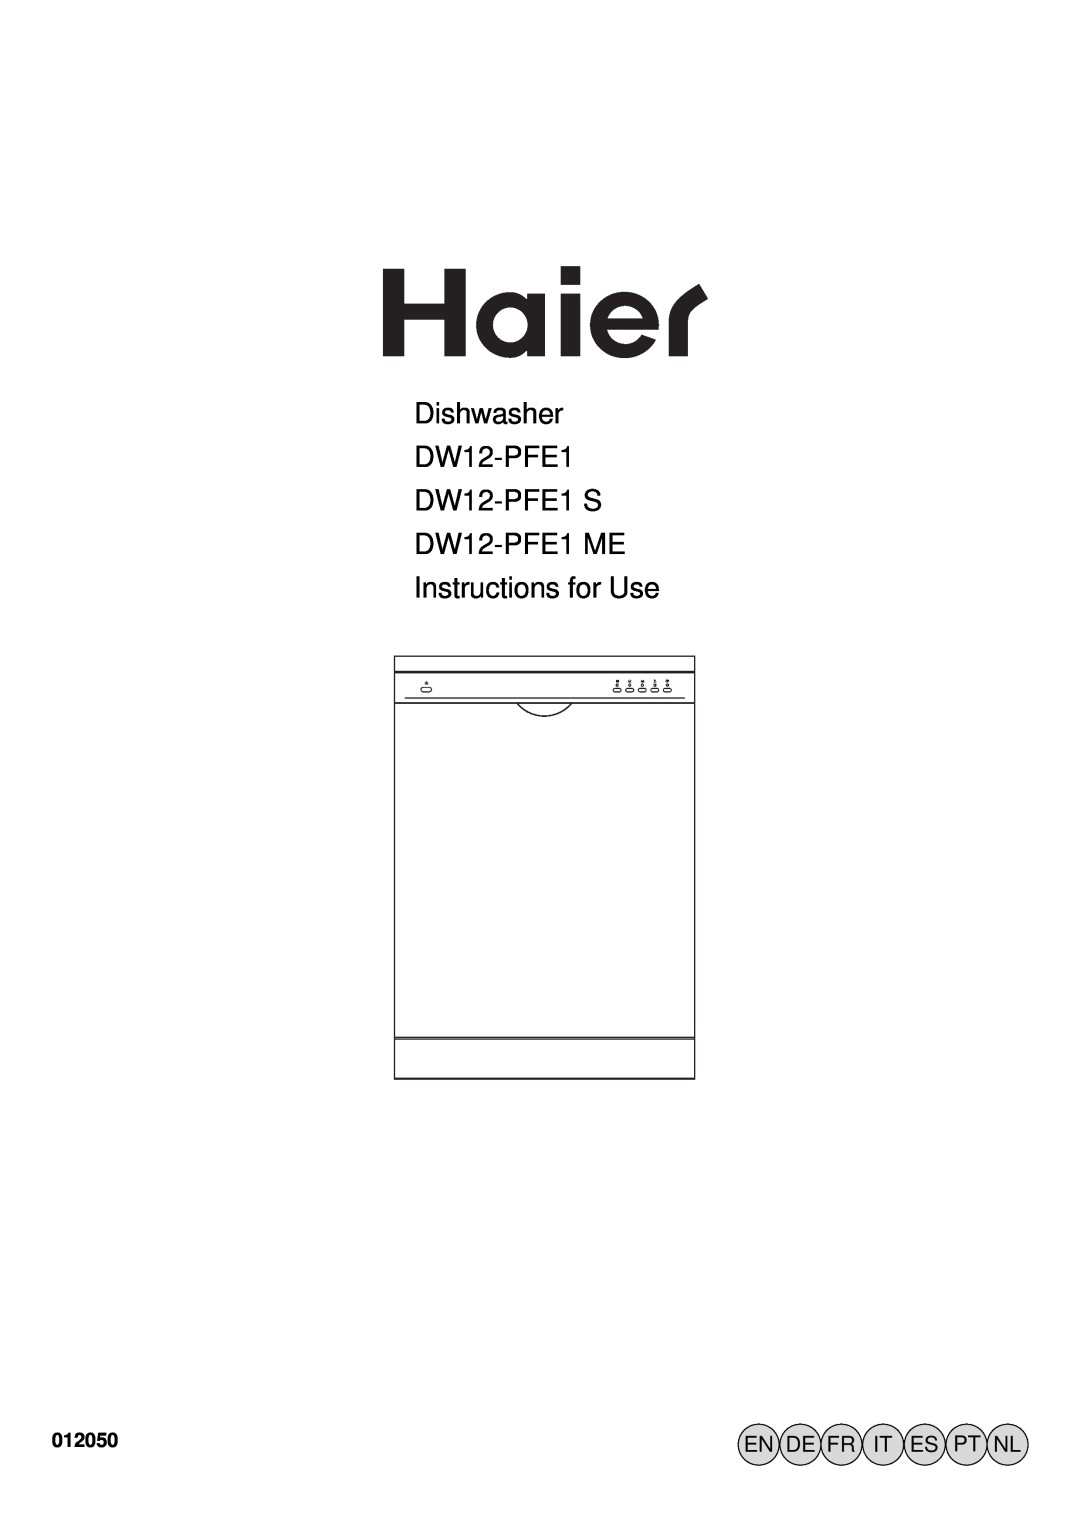 Haier manual En De Fr It Es Pt Nl, 012050, Dishwasher DW12-PFE1 DW12-PFE1 S DW12-PFE1 ME Instructions for Use 